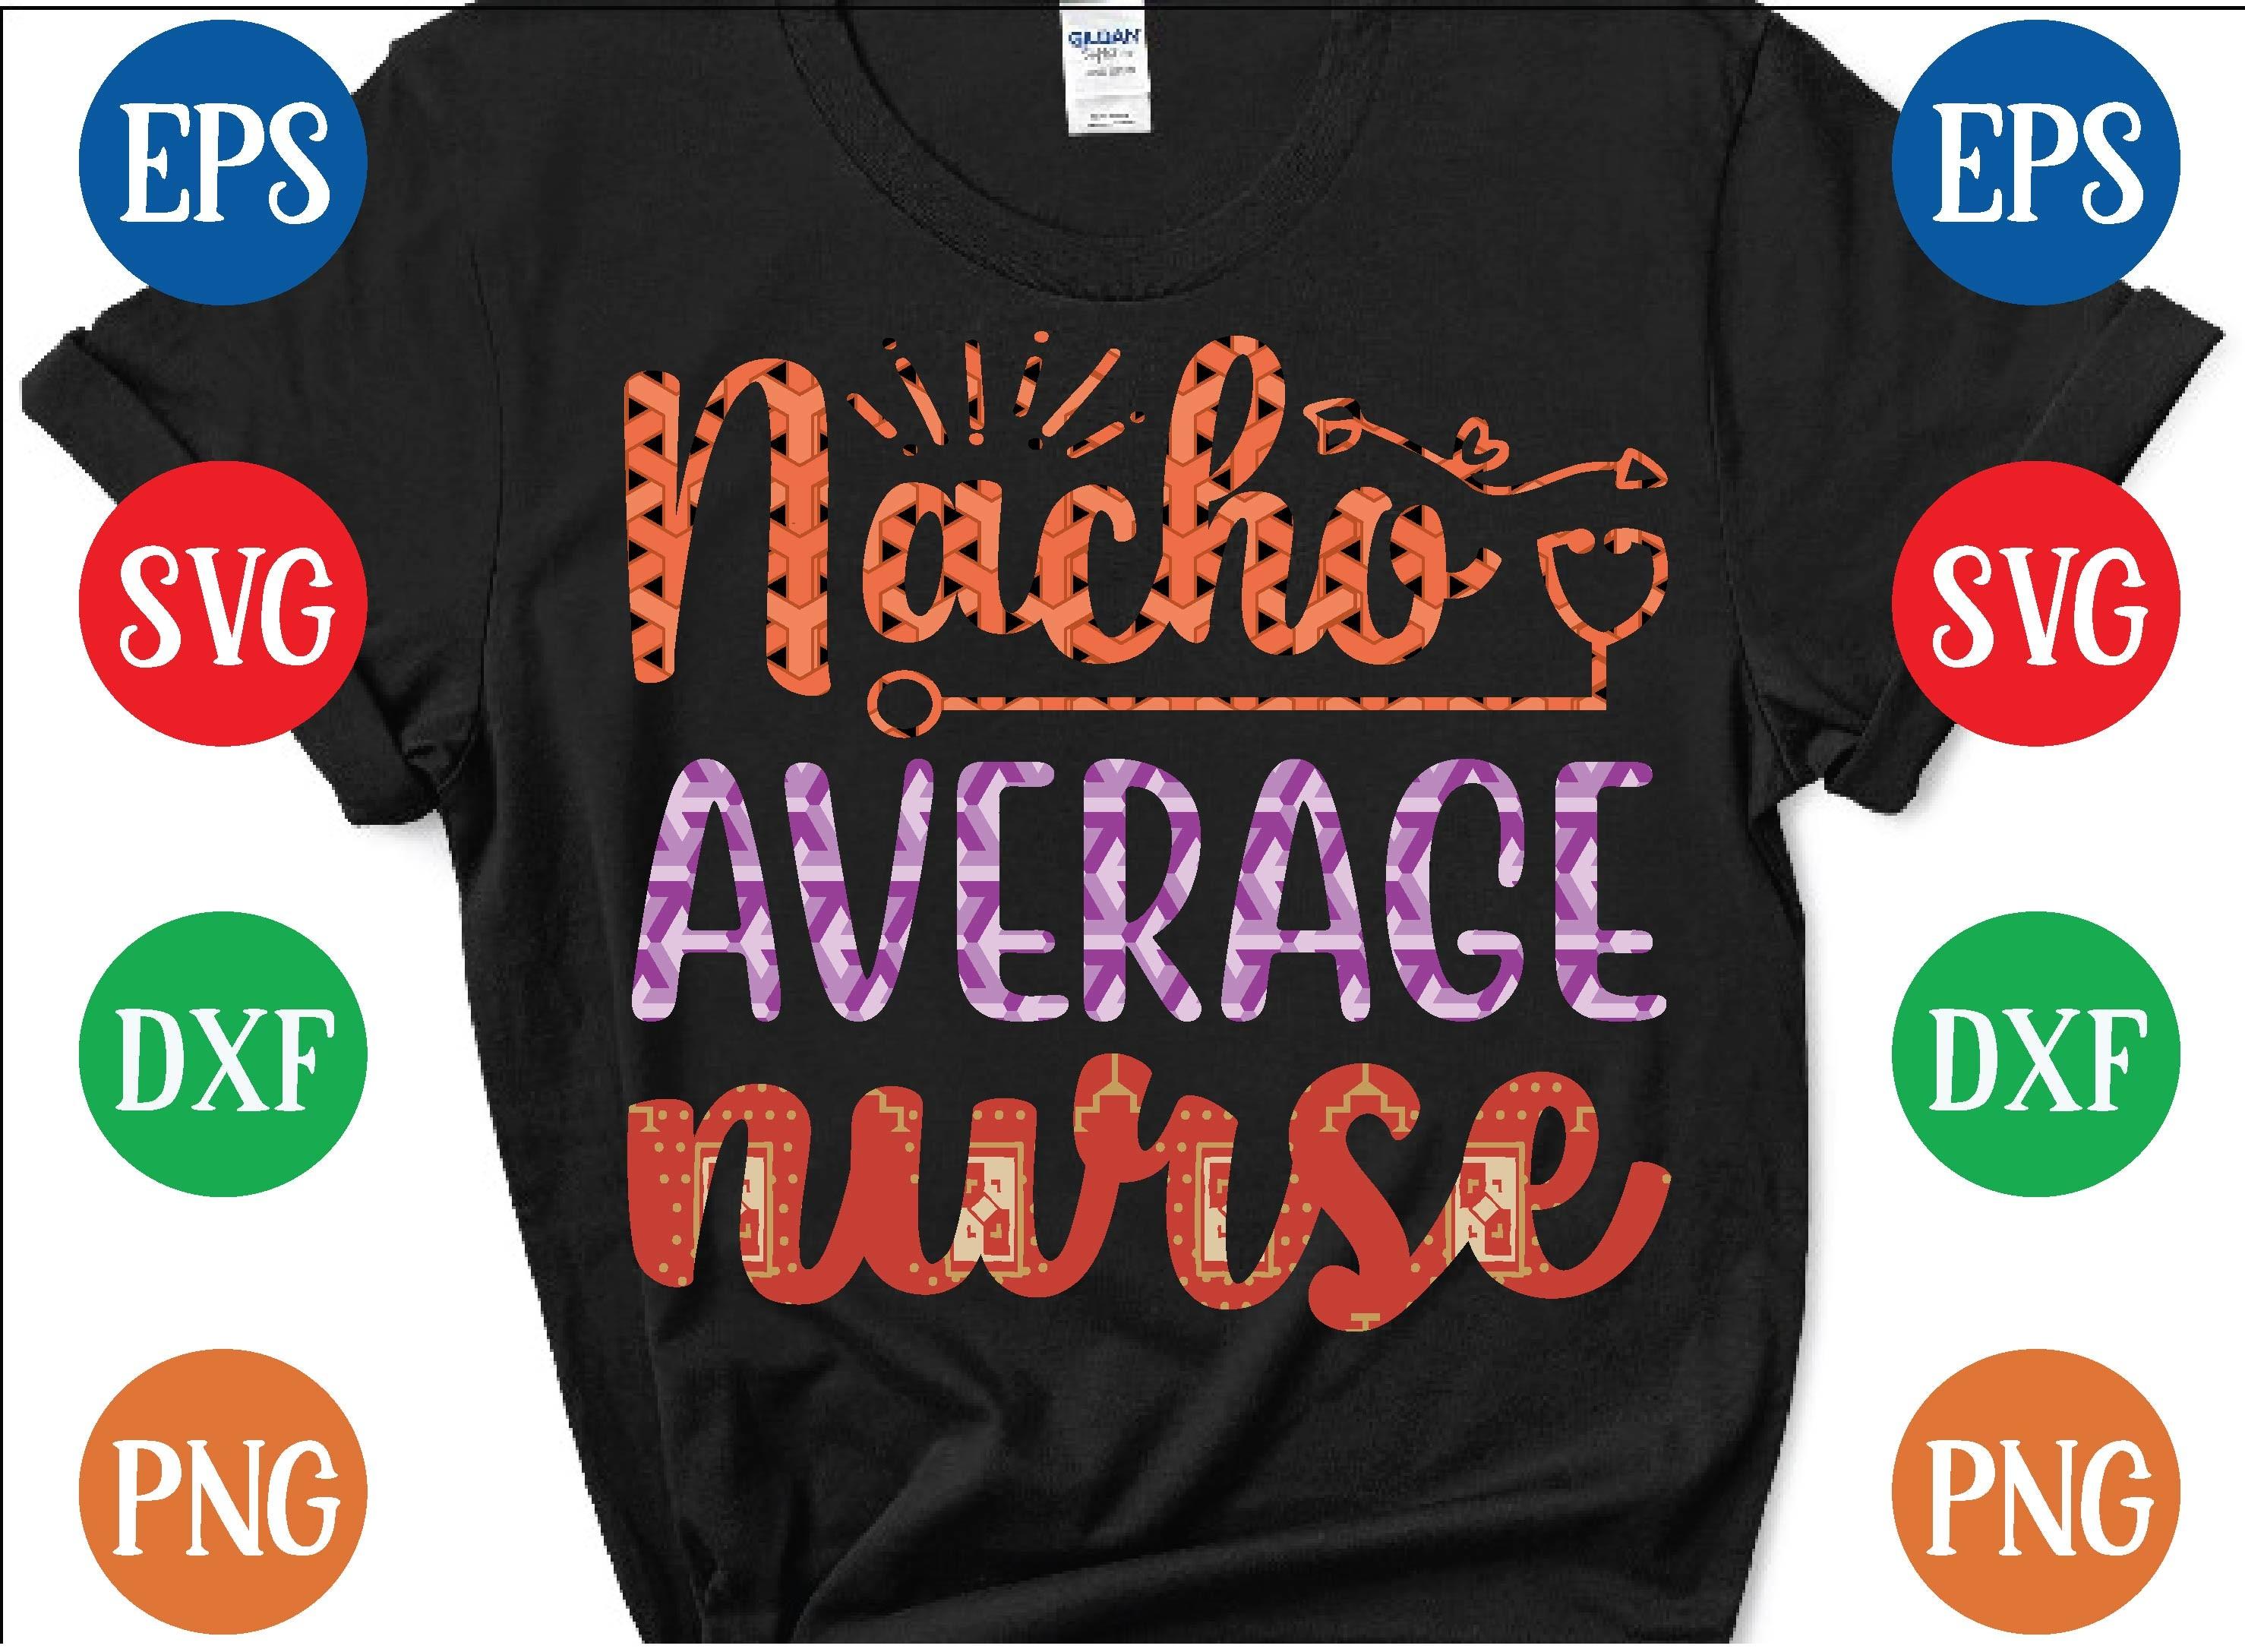 Nacho Average Nurse Svg Design